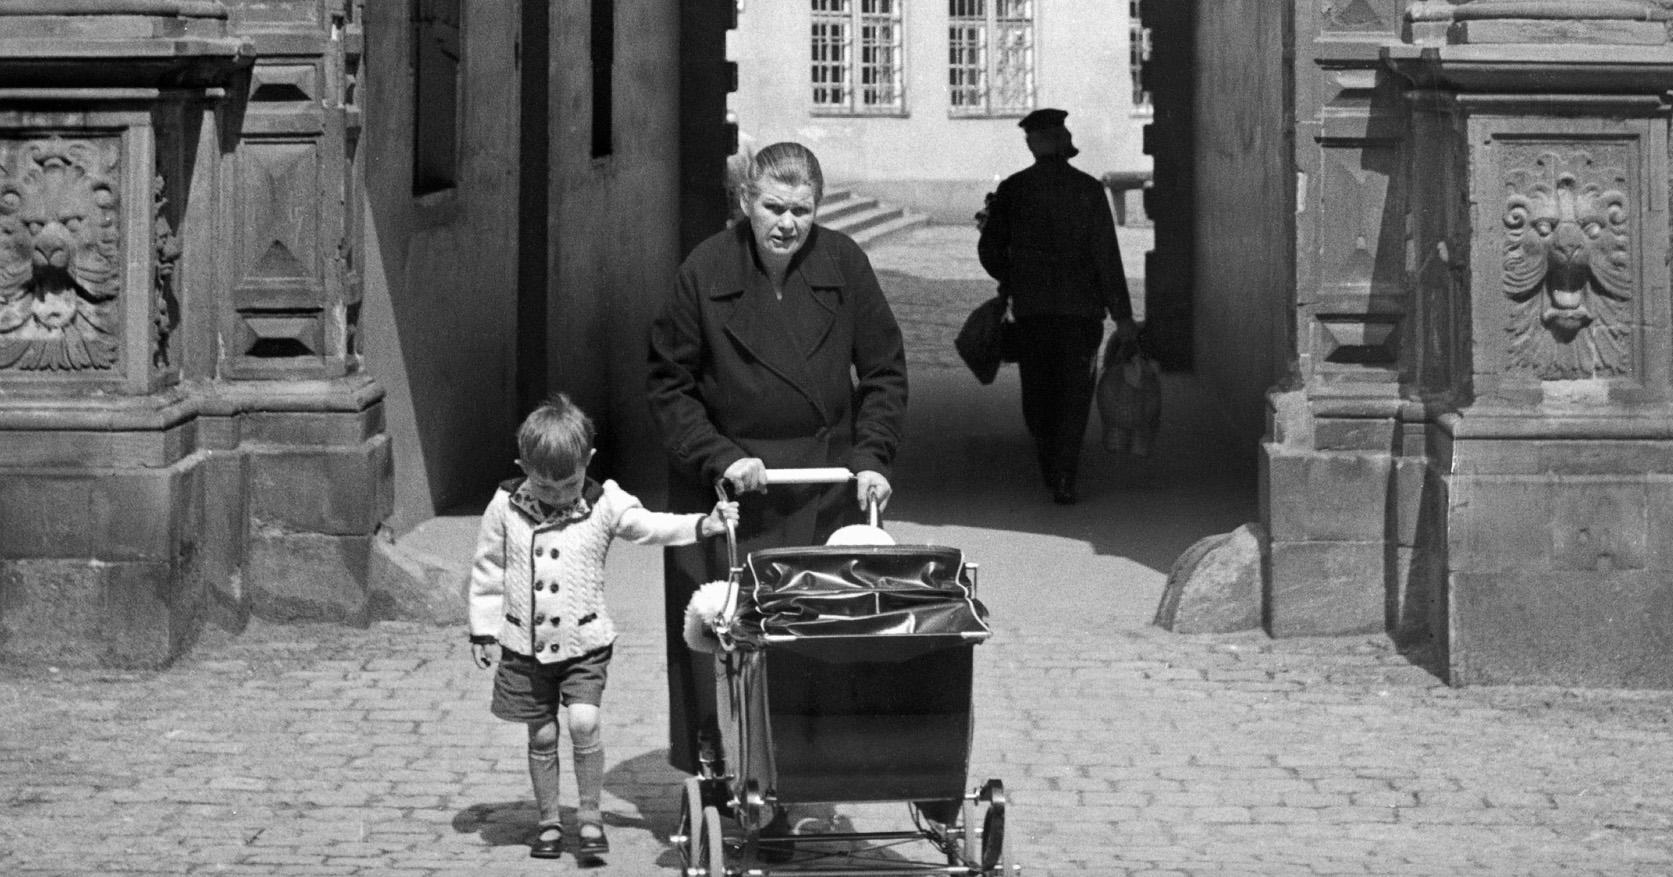 Gate Darmstadt castle granny grandchild stroller, Germany 1938 Printed Later  - Photograph by Karl Heinrich Lämmel